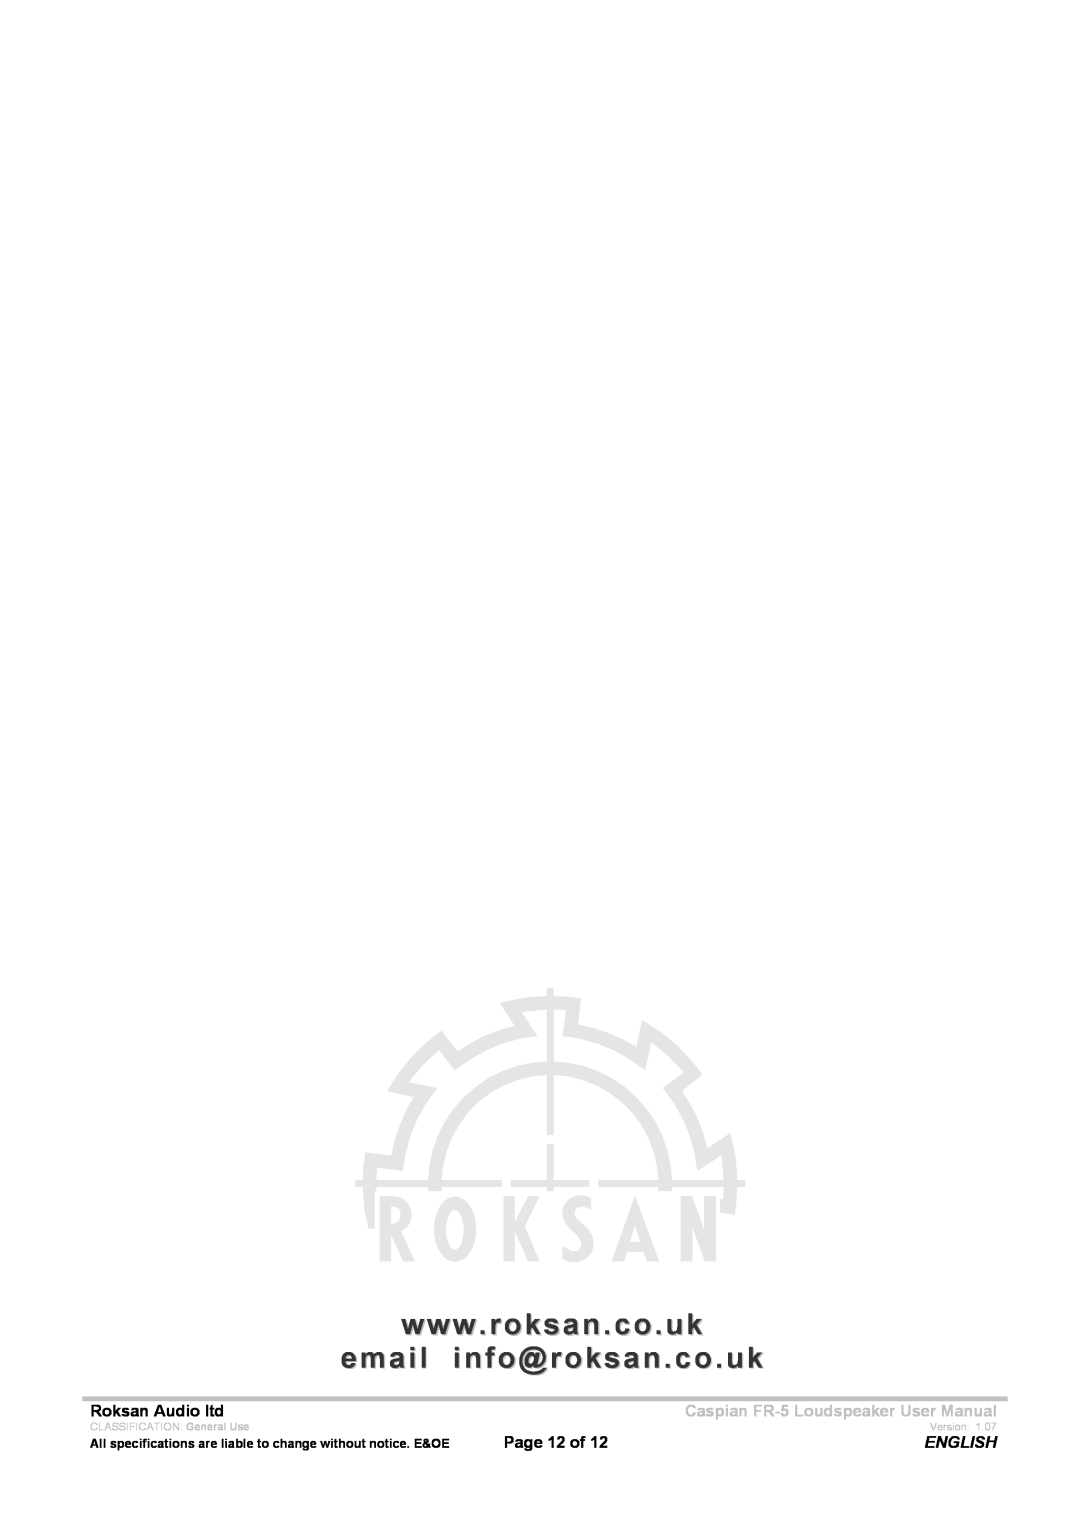 Roksan Audio FR - 5 user manual English, CLASSIFICATION General Use, Version 